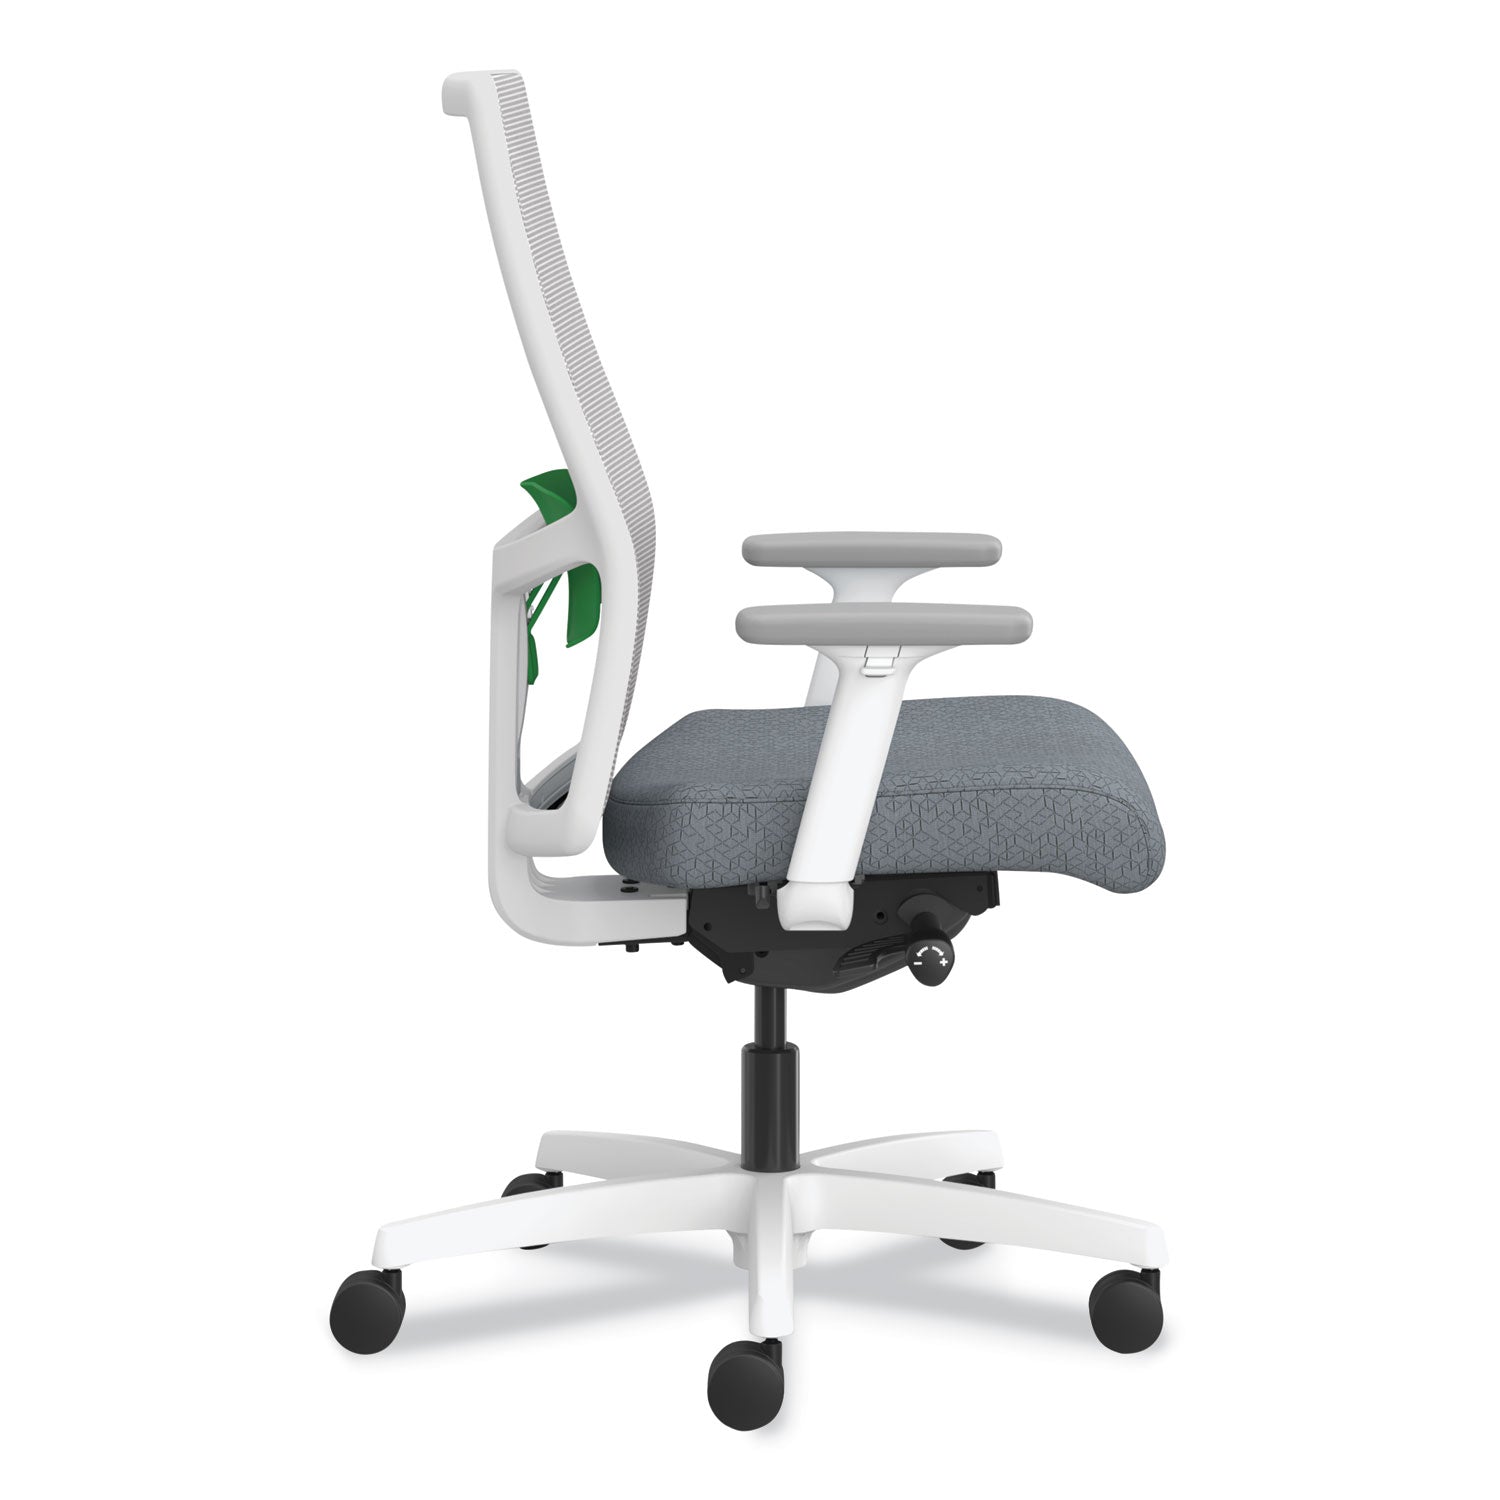 ignition-20-4-way-stretch-mid-back-mesh-task-chair-green-adjustable-lumbar-support-basalt-fog-whiteships-in-7-10-bus-days_honi2mm2afa25kx - 3